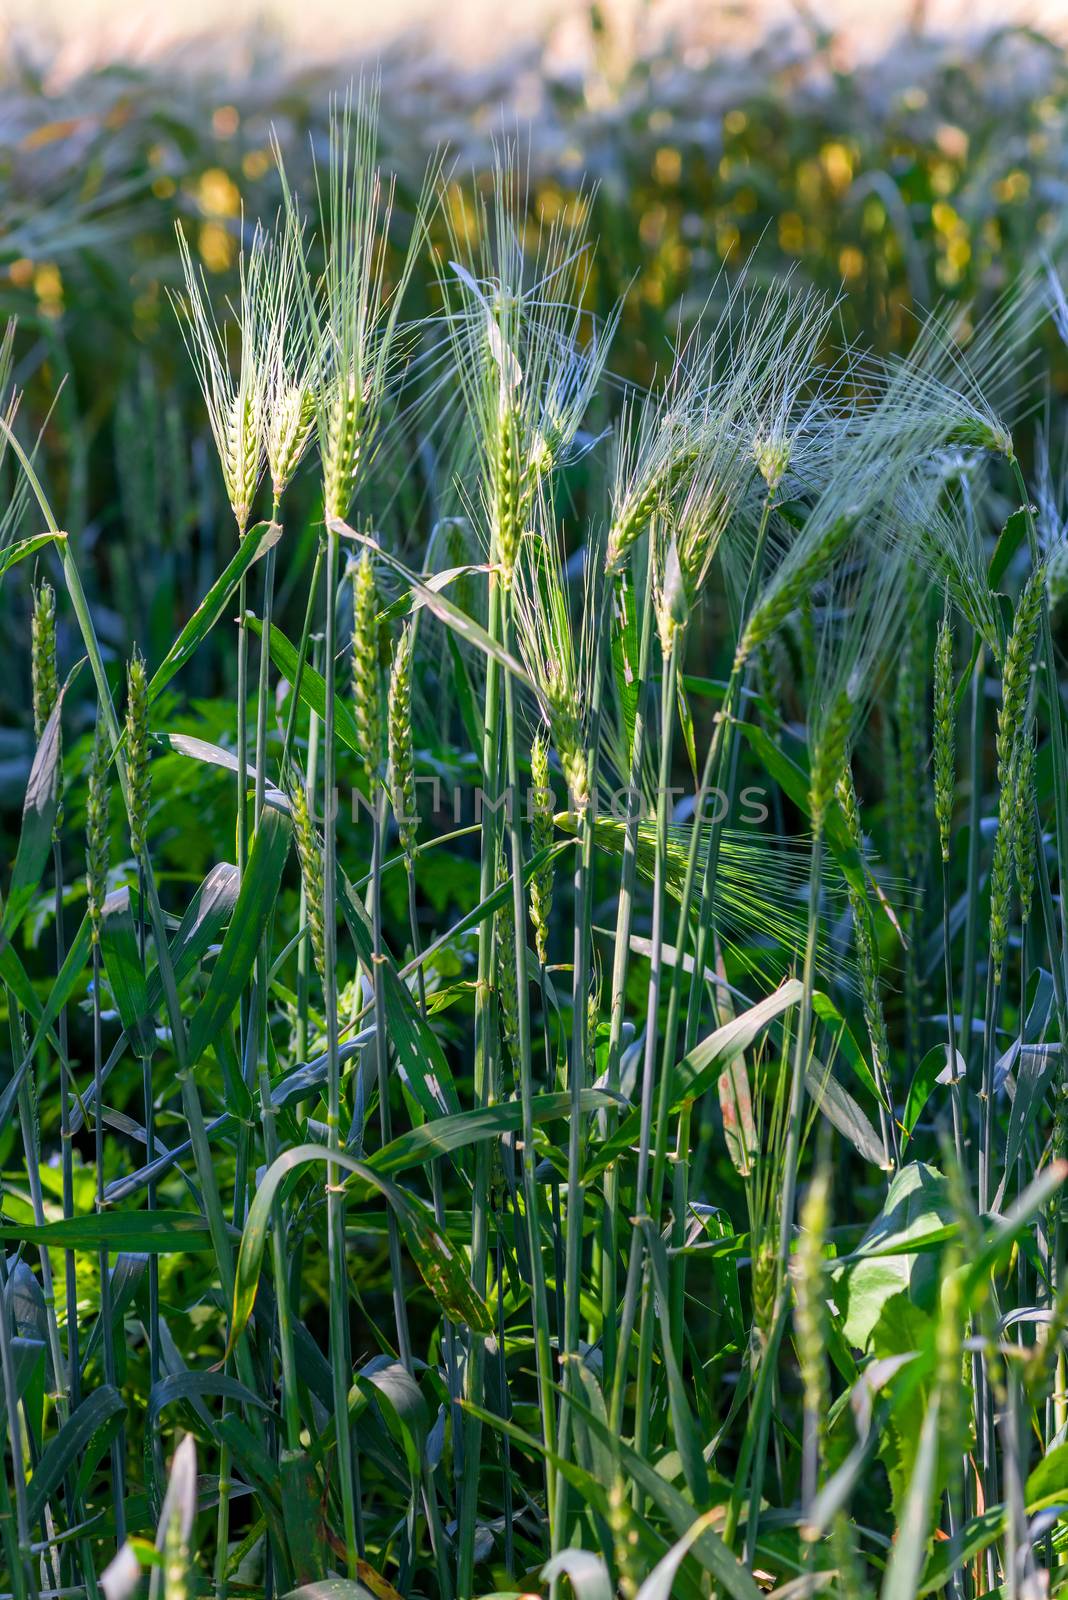 vertical photo of growing ears of juicy wheat in a field by kosmsos111